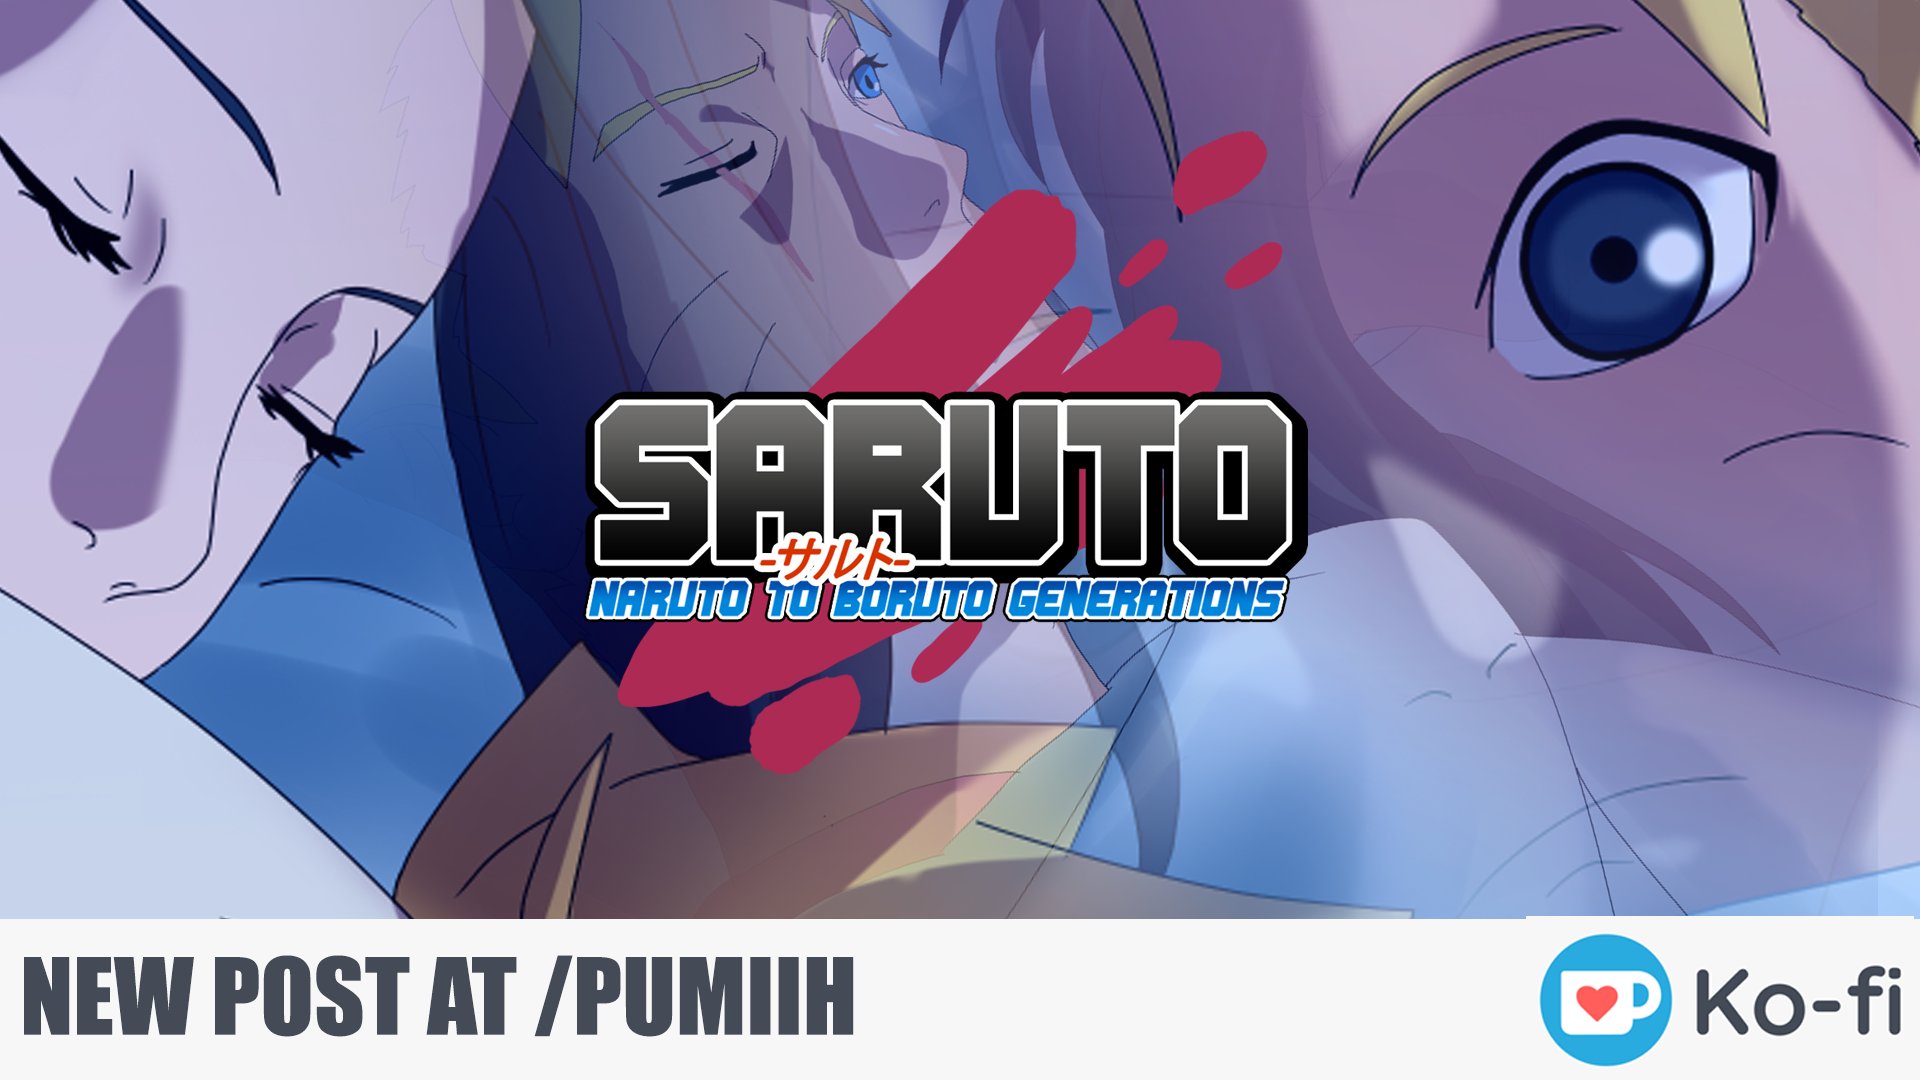 PumiiH - Final posts for today #Saruto and Boruto outfits